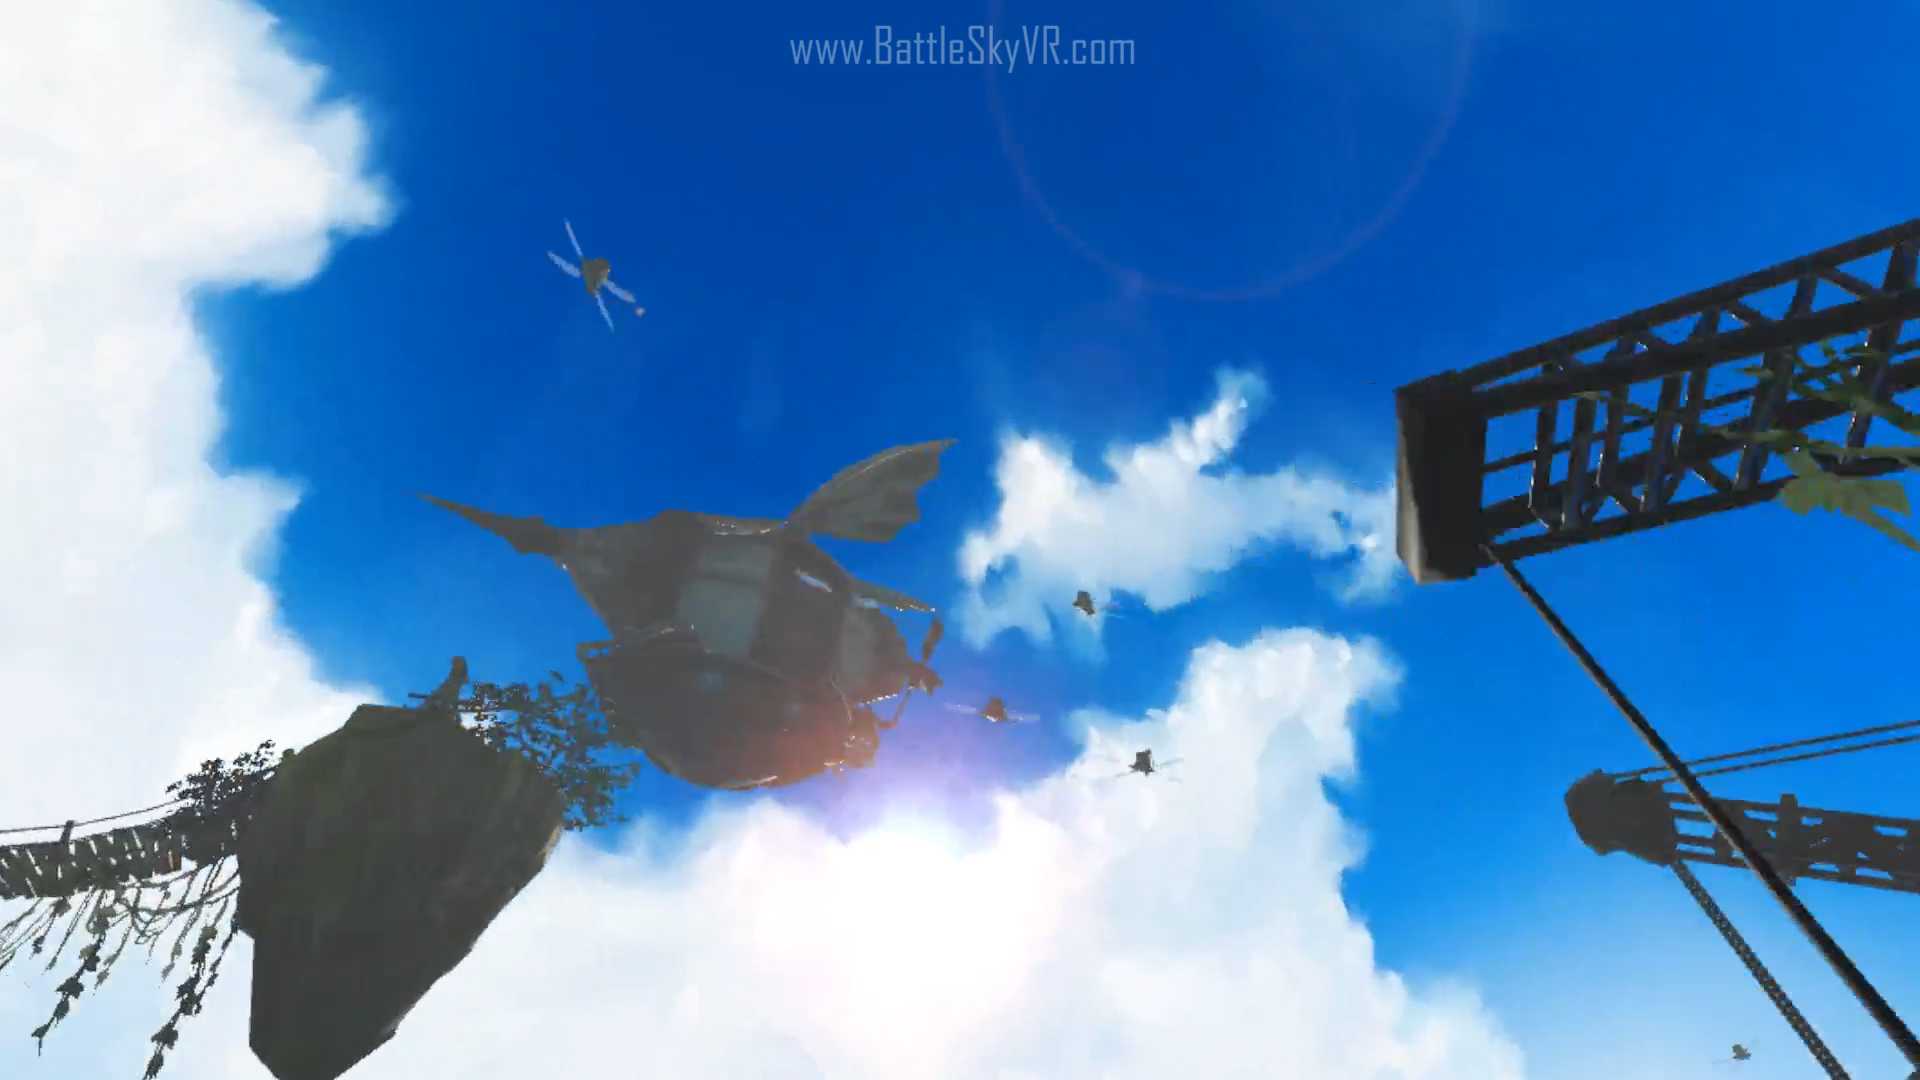 BattleSky VR